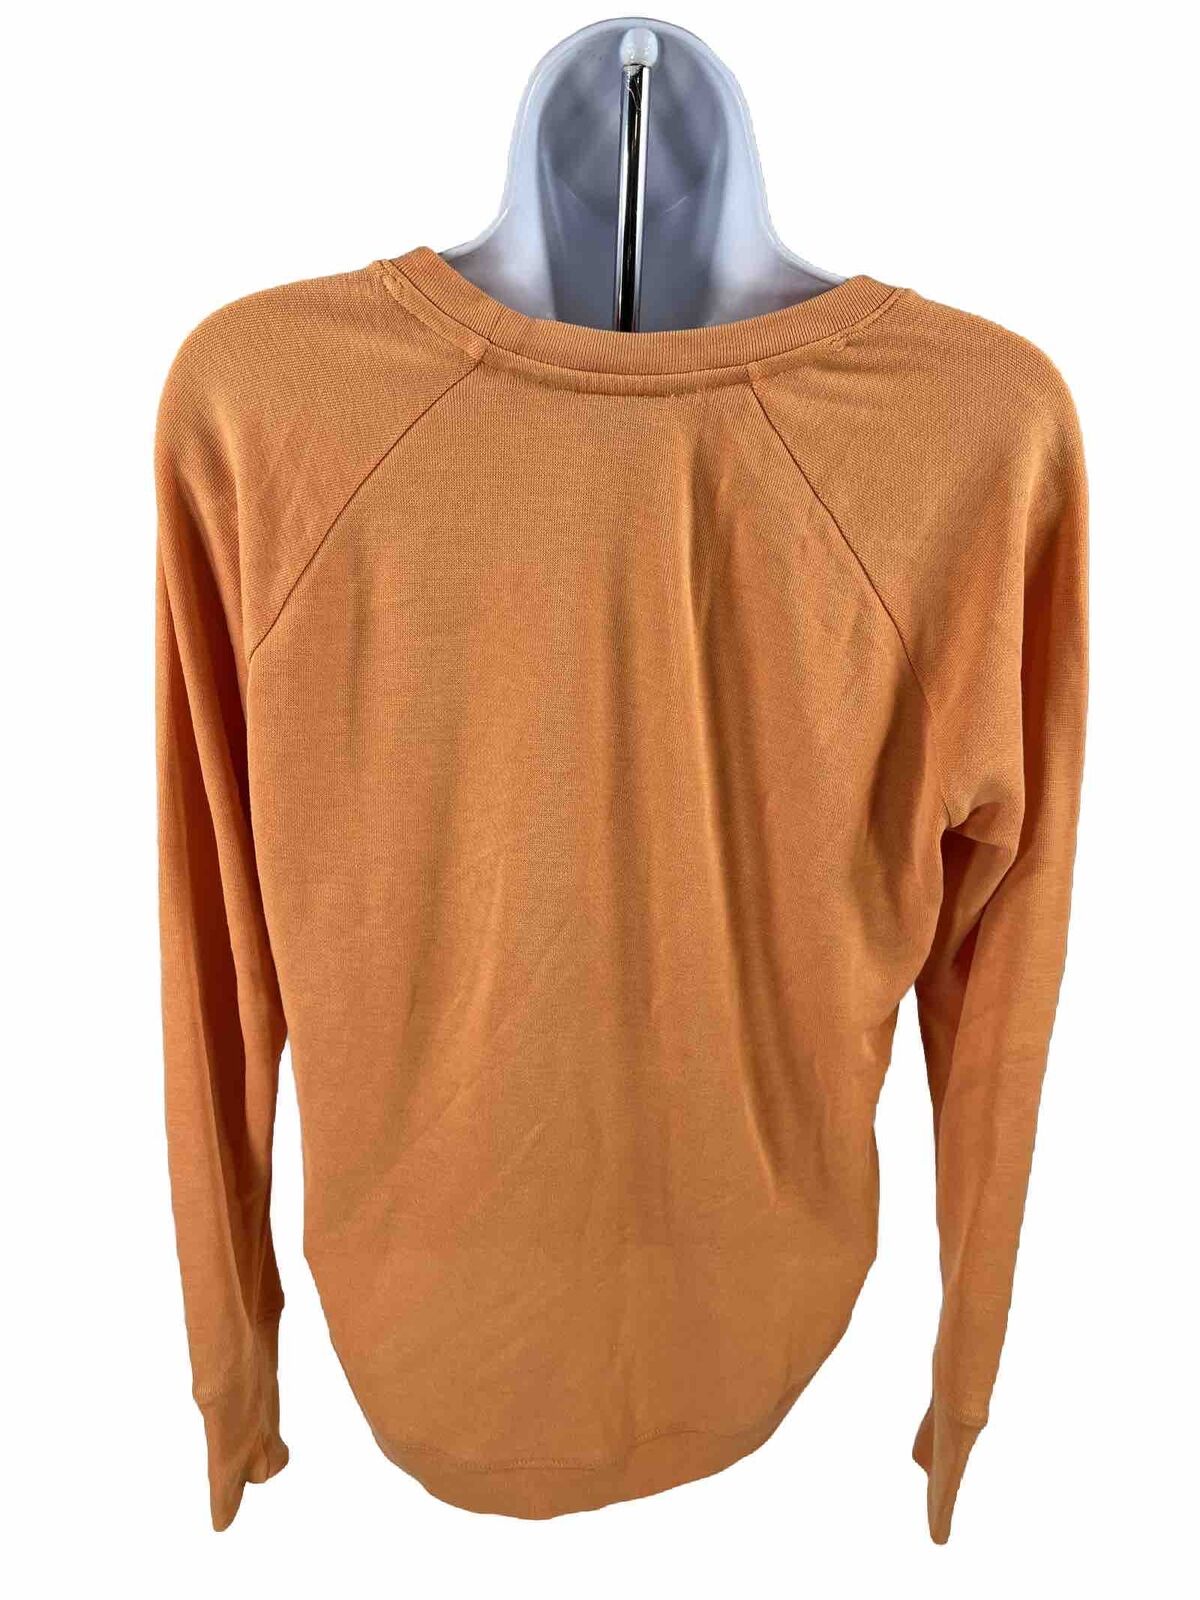 Athleta Women's Orange Mindset Sweatshirt Long Sleeve - S